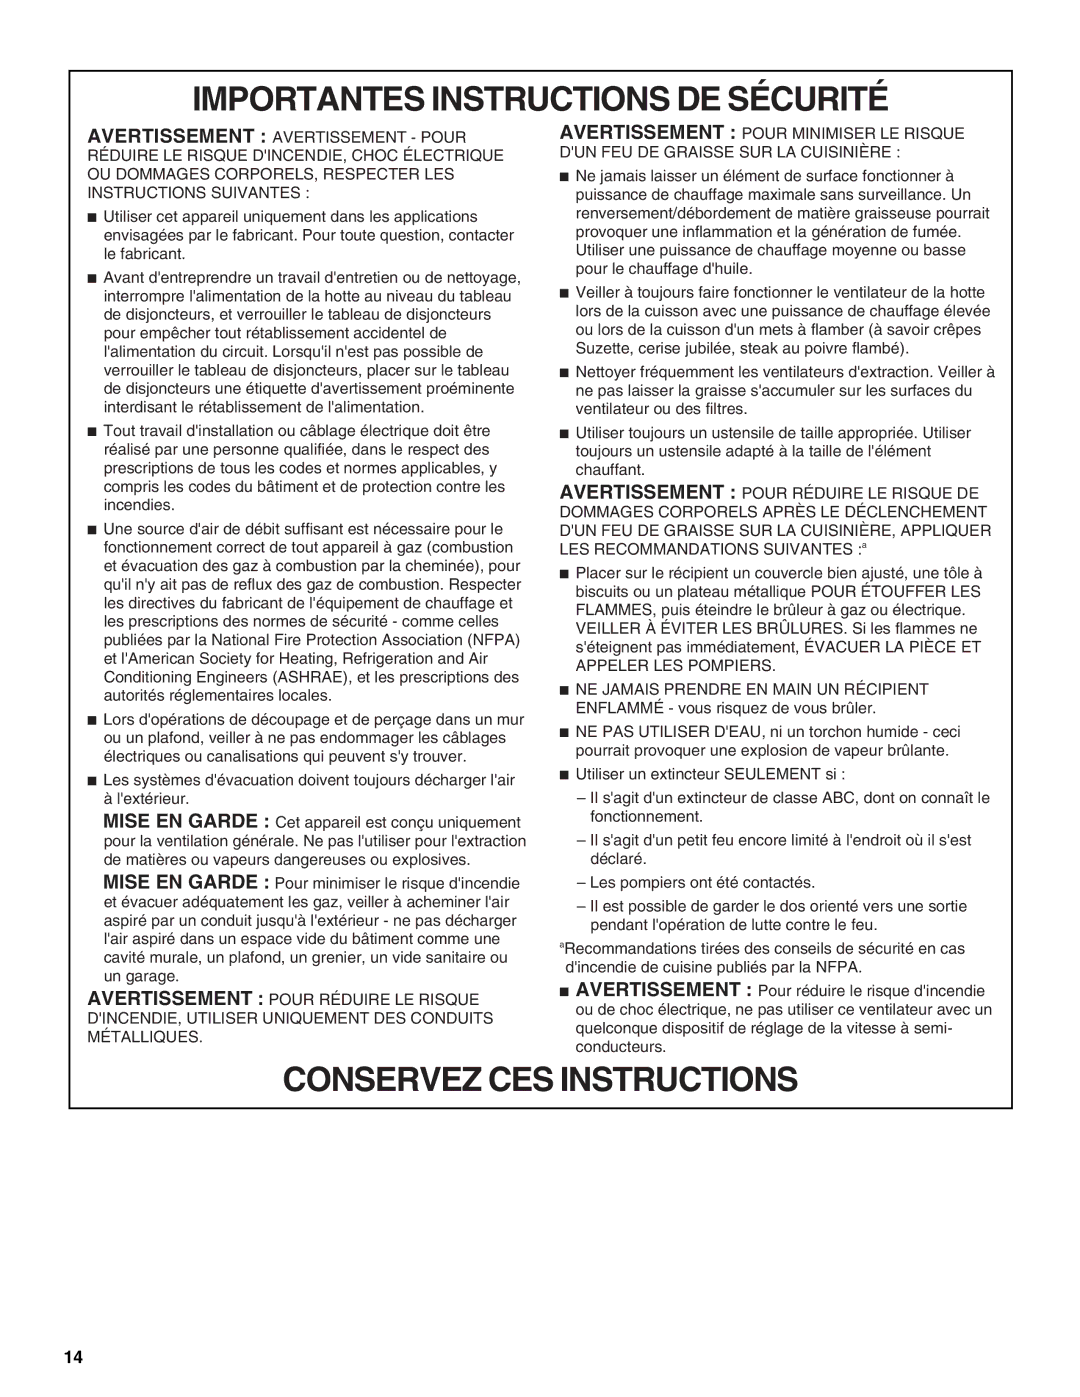 KitchenAid RangeHood installation instructions Conservez CES Instructions 